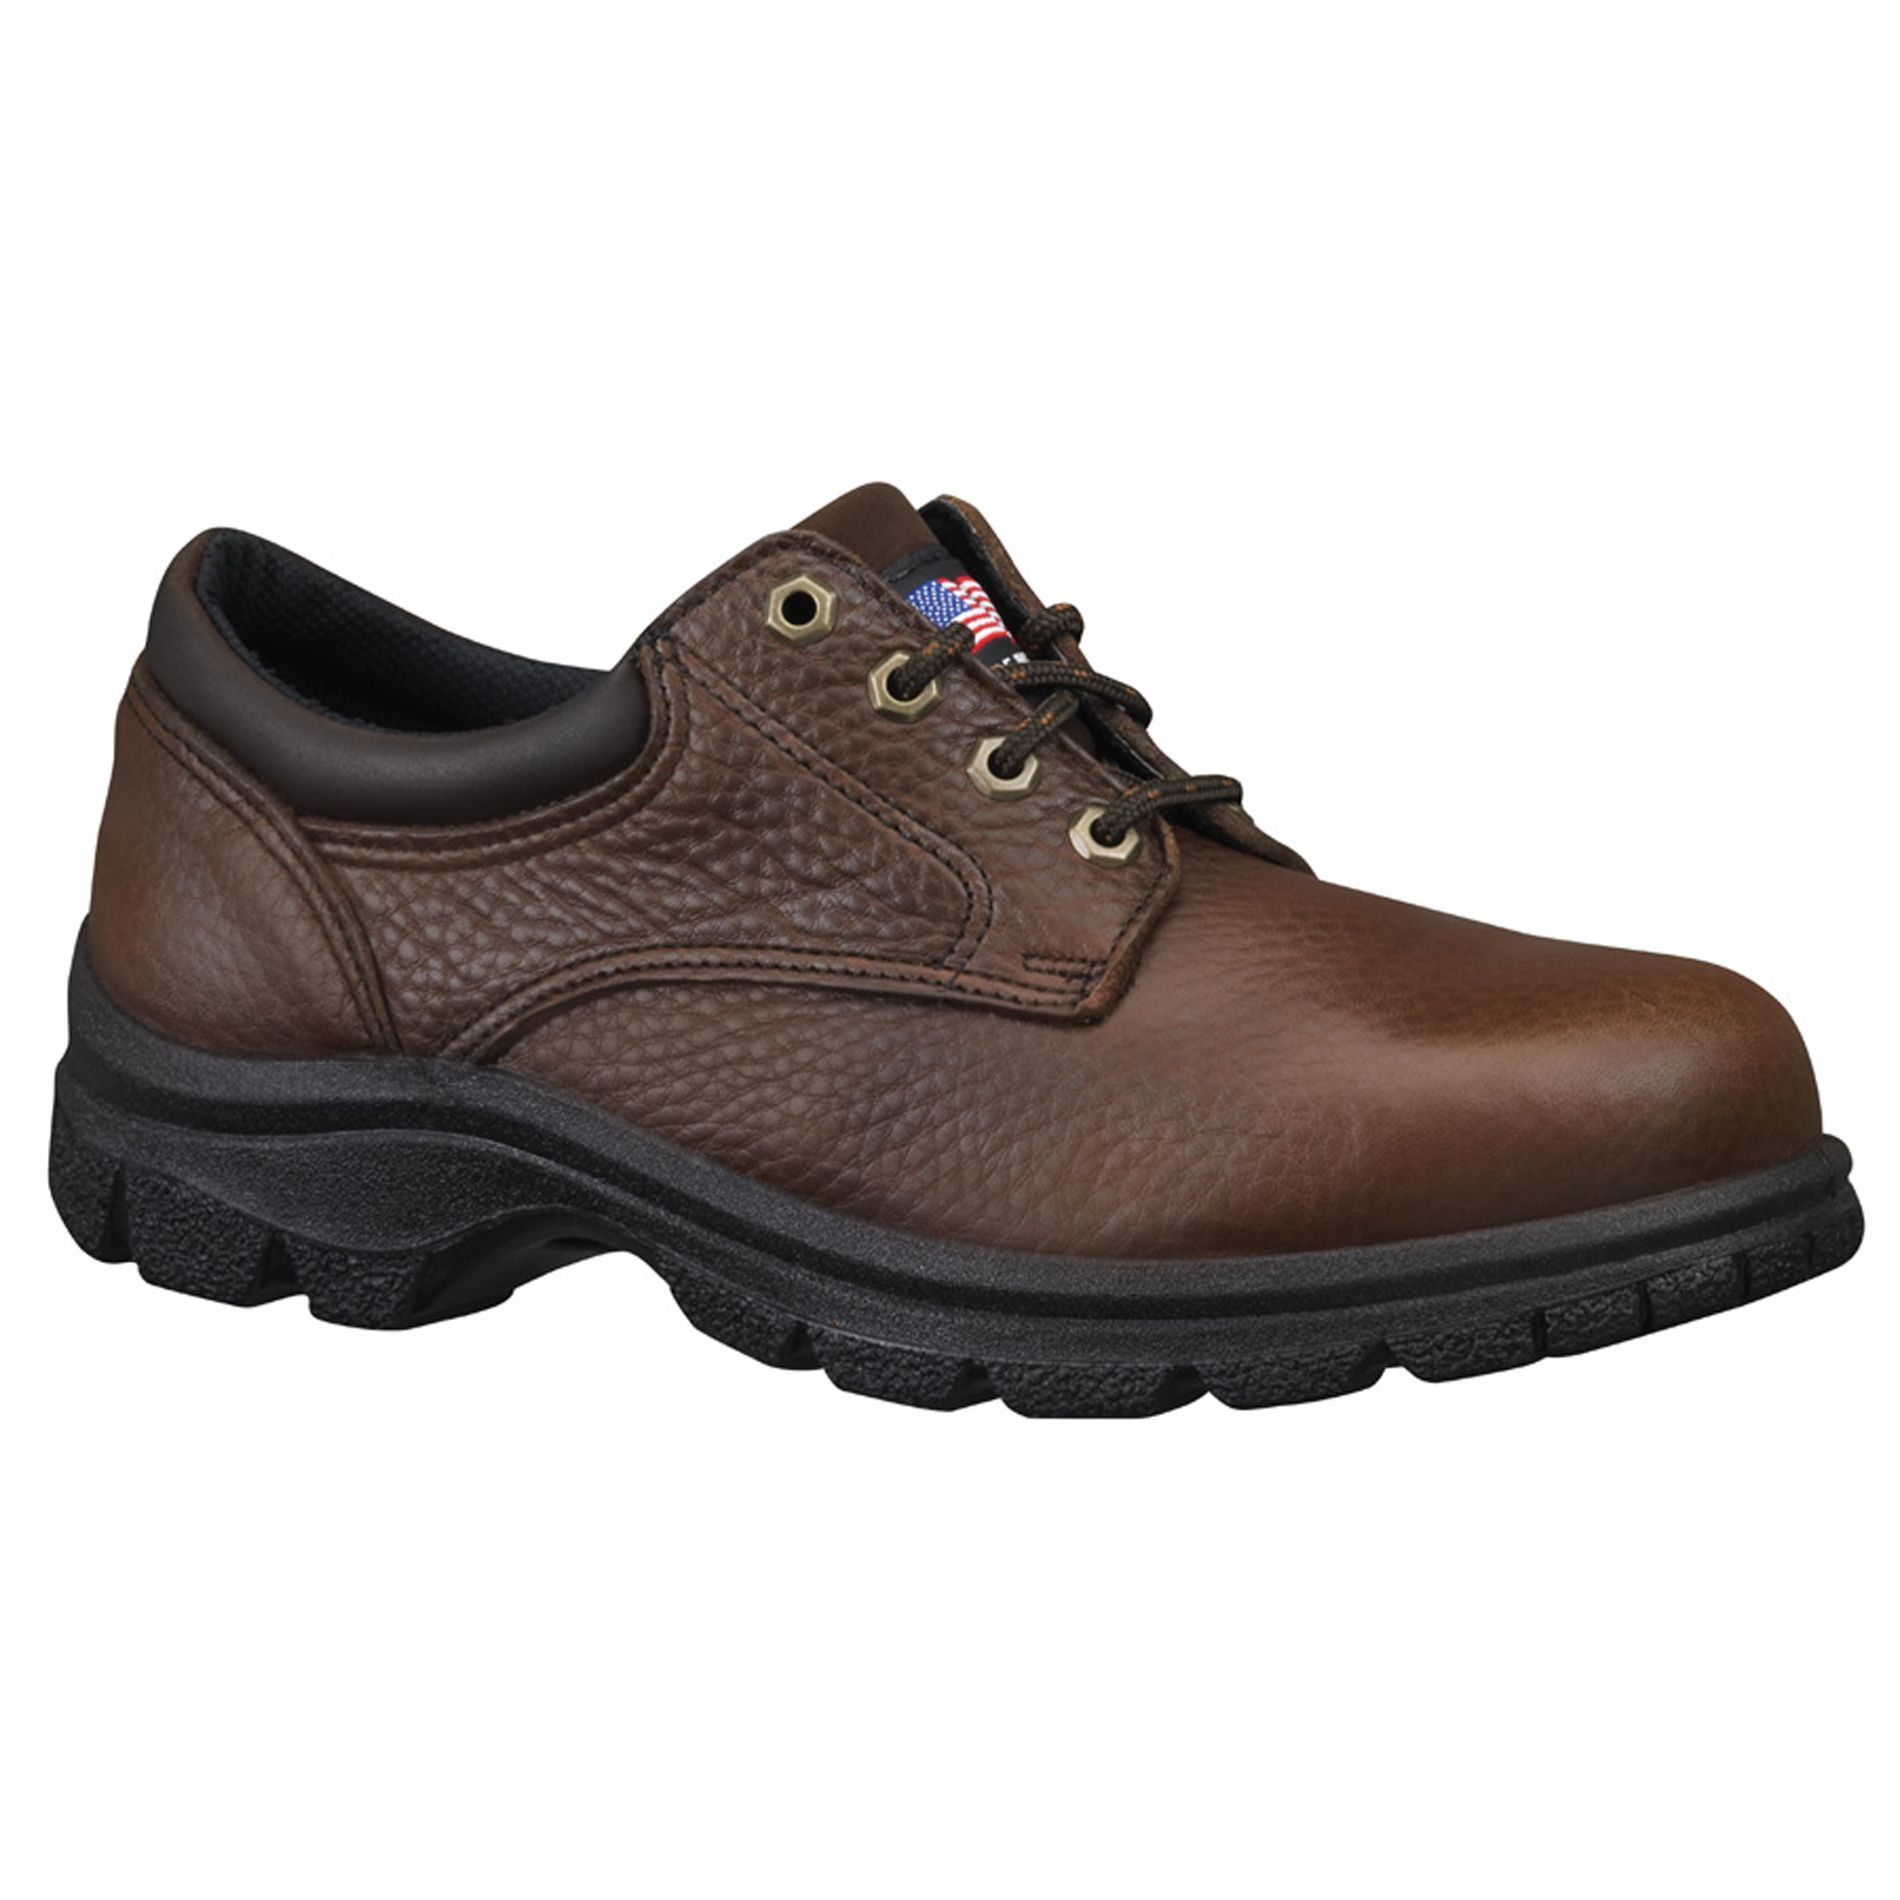 Men's American Heritage 804-4760 Brown Steel Toe Work Shoes - Wide Width Available